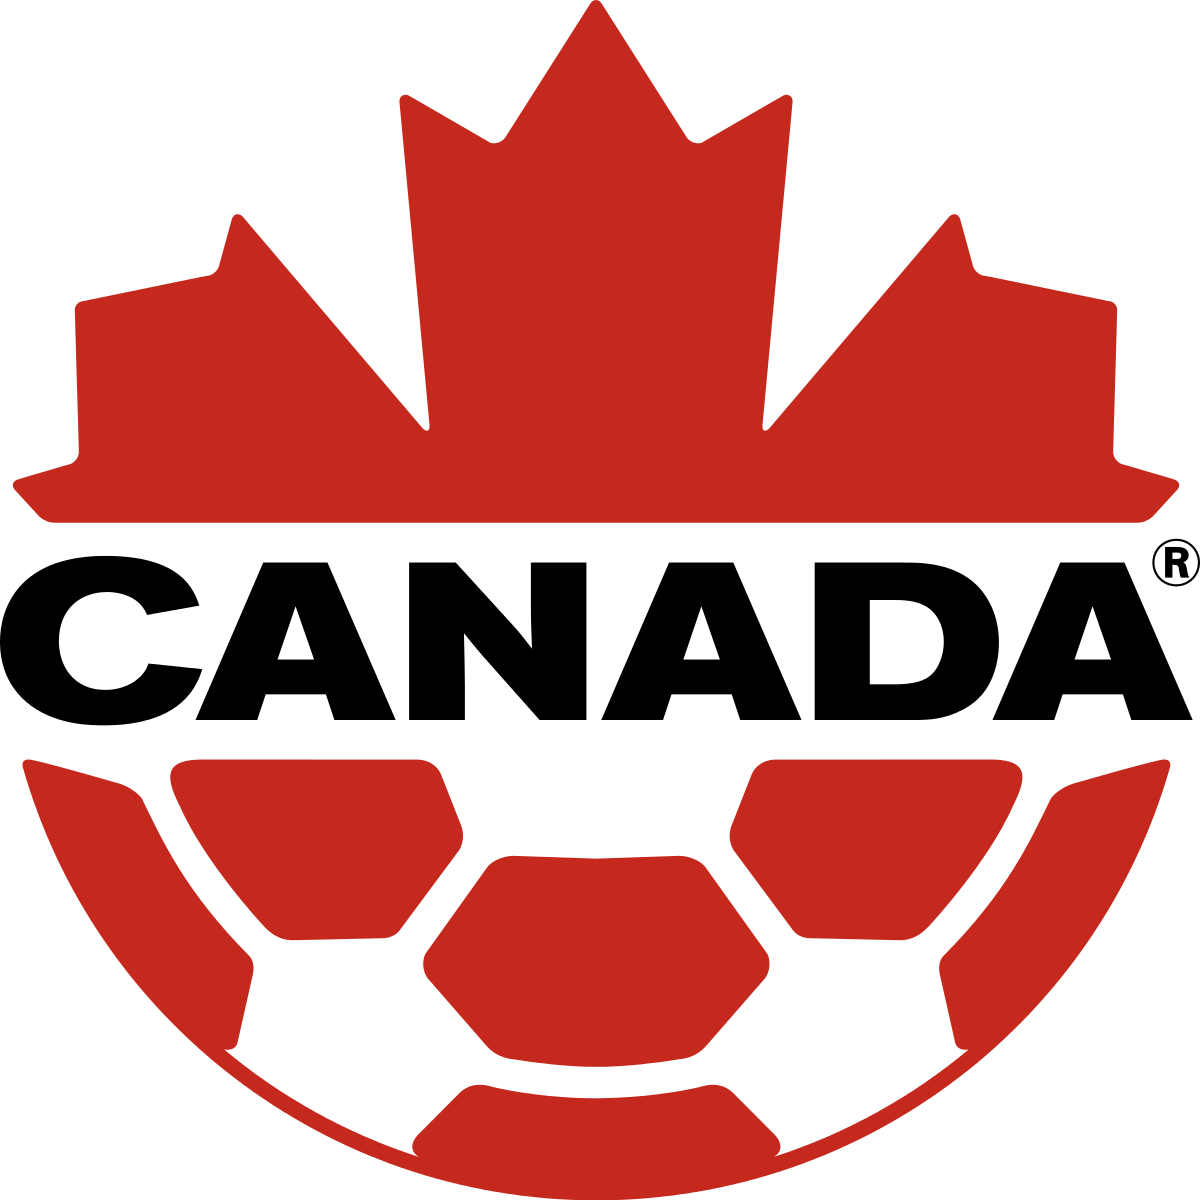 Foreign Soccer Logo - Canada men's national soccer team